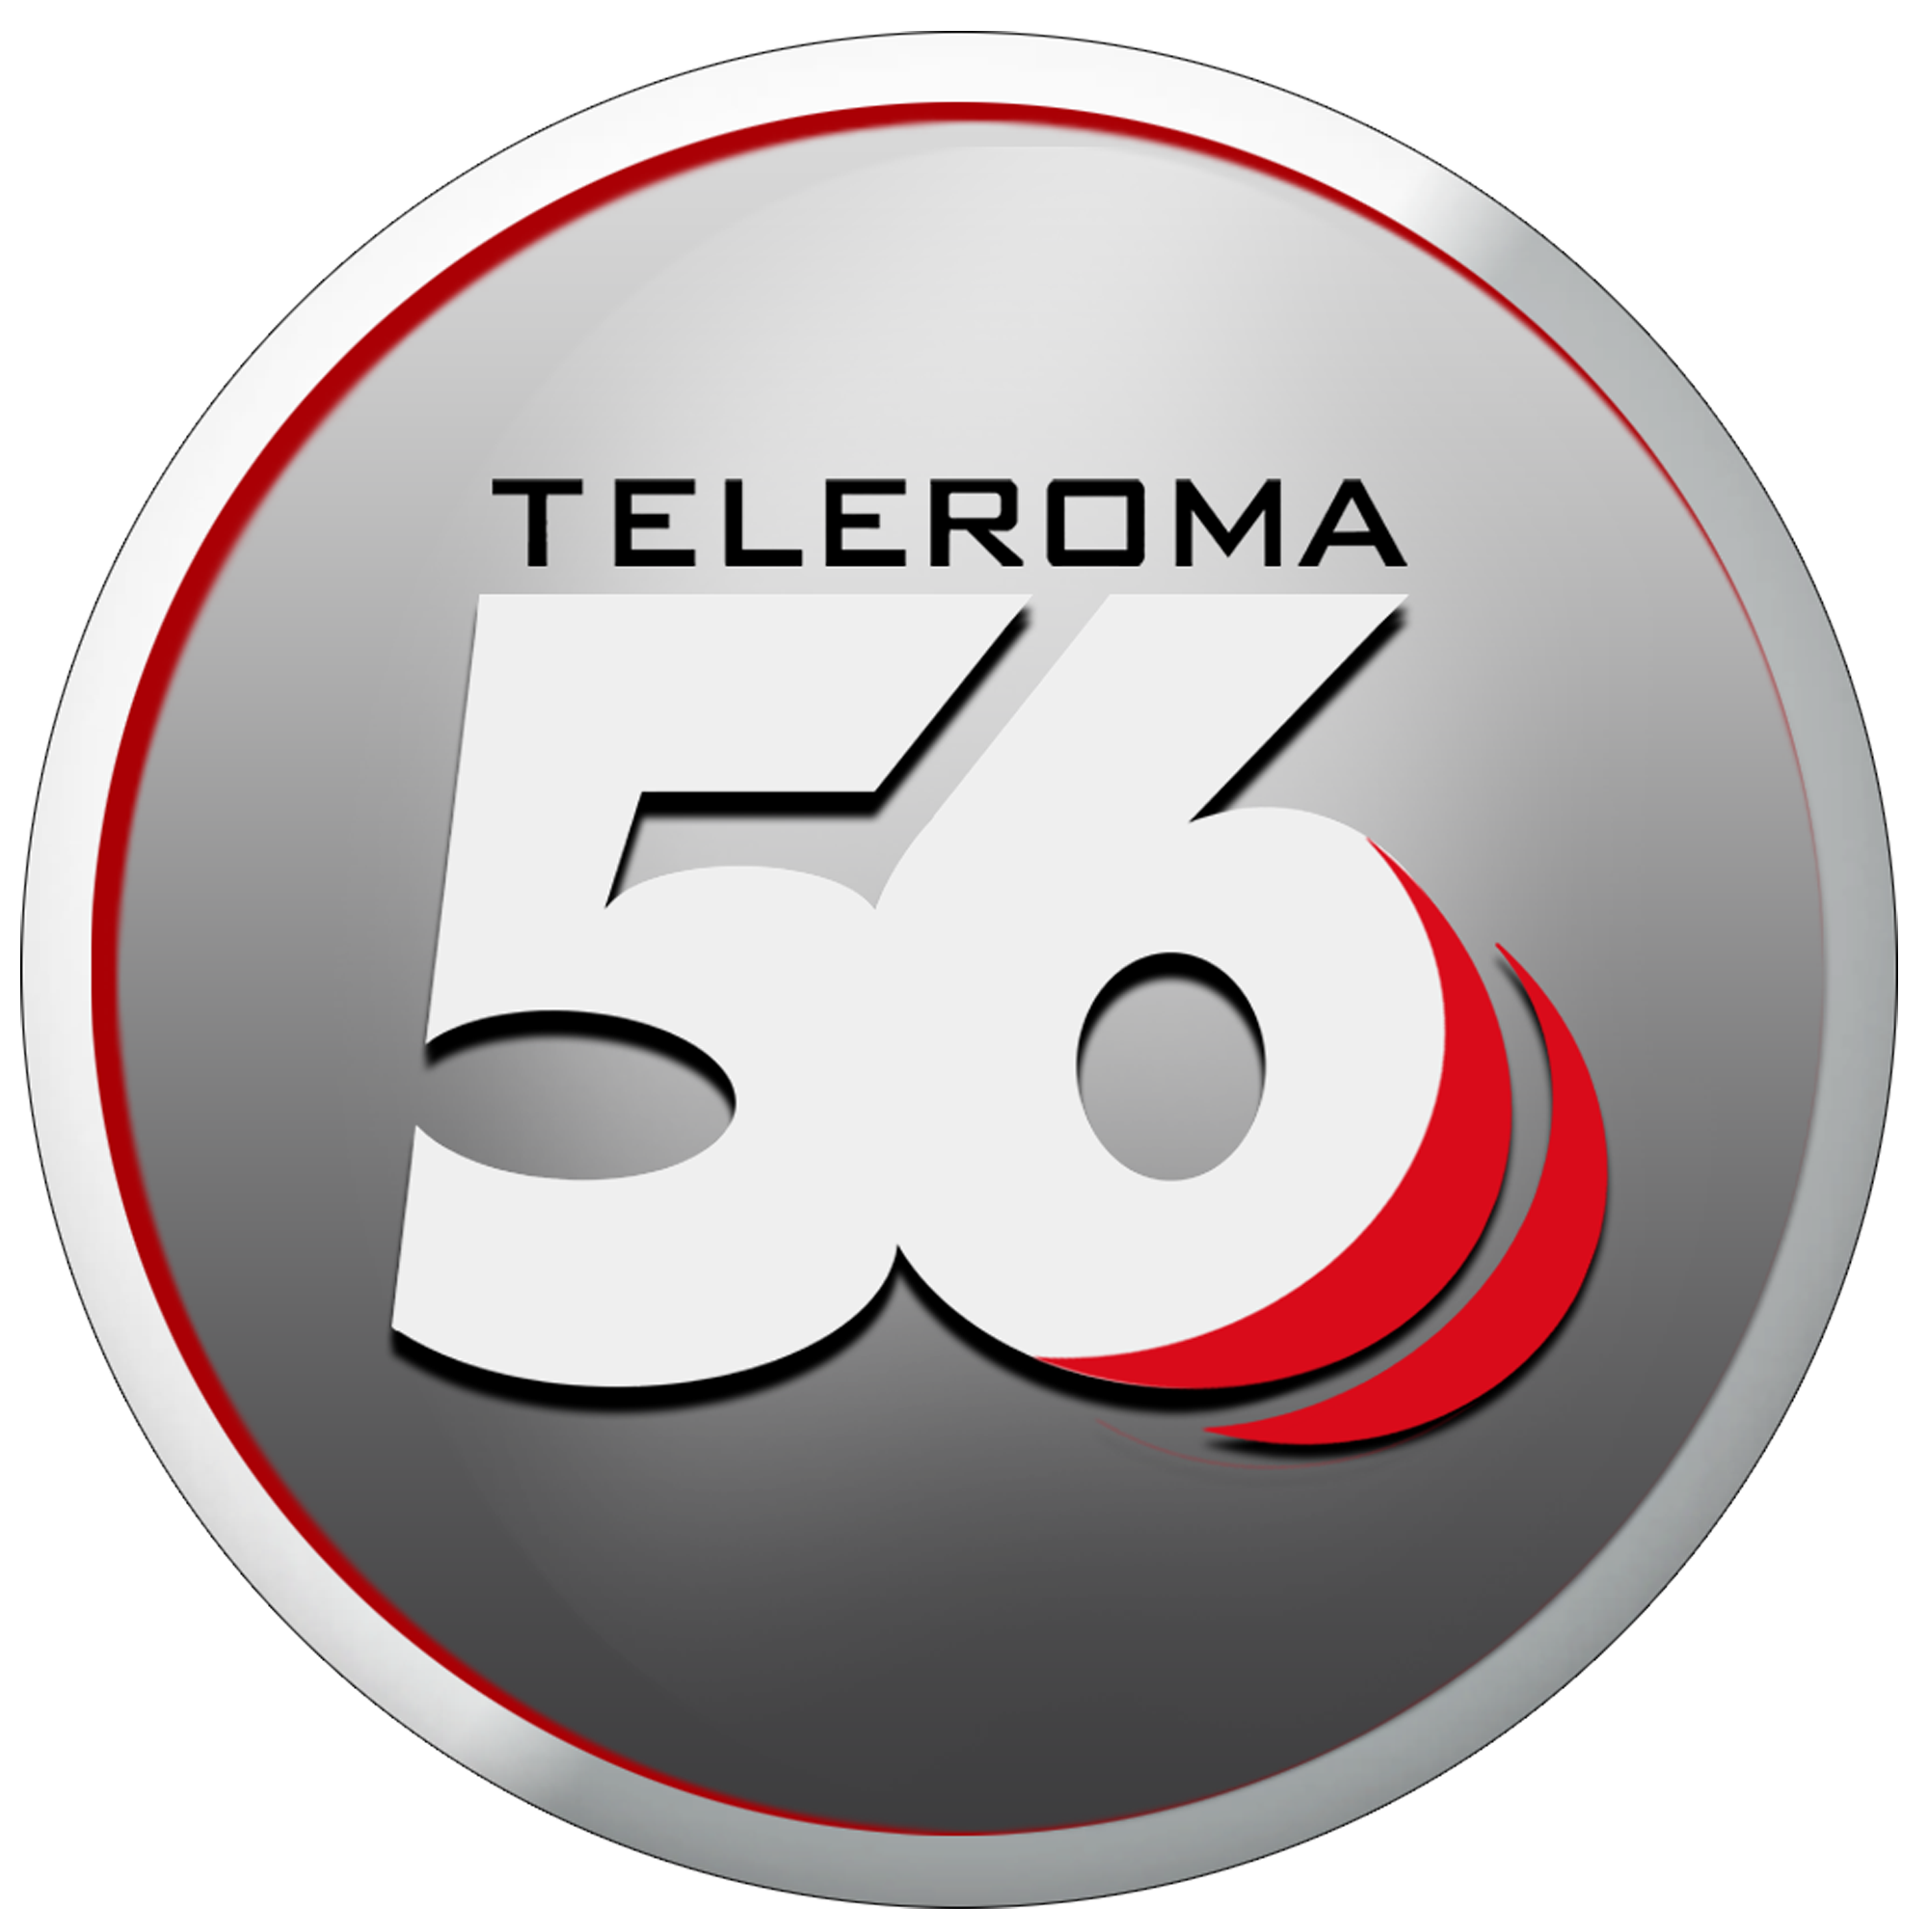 Teleroma 56